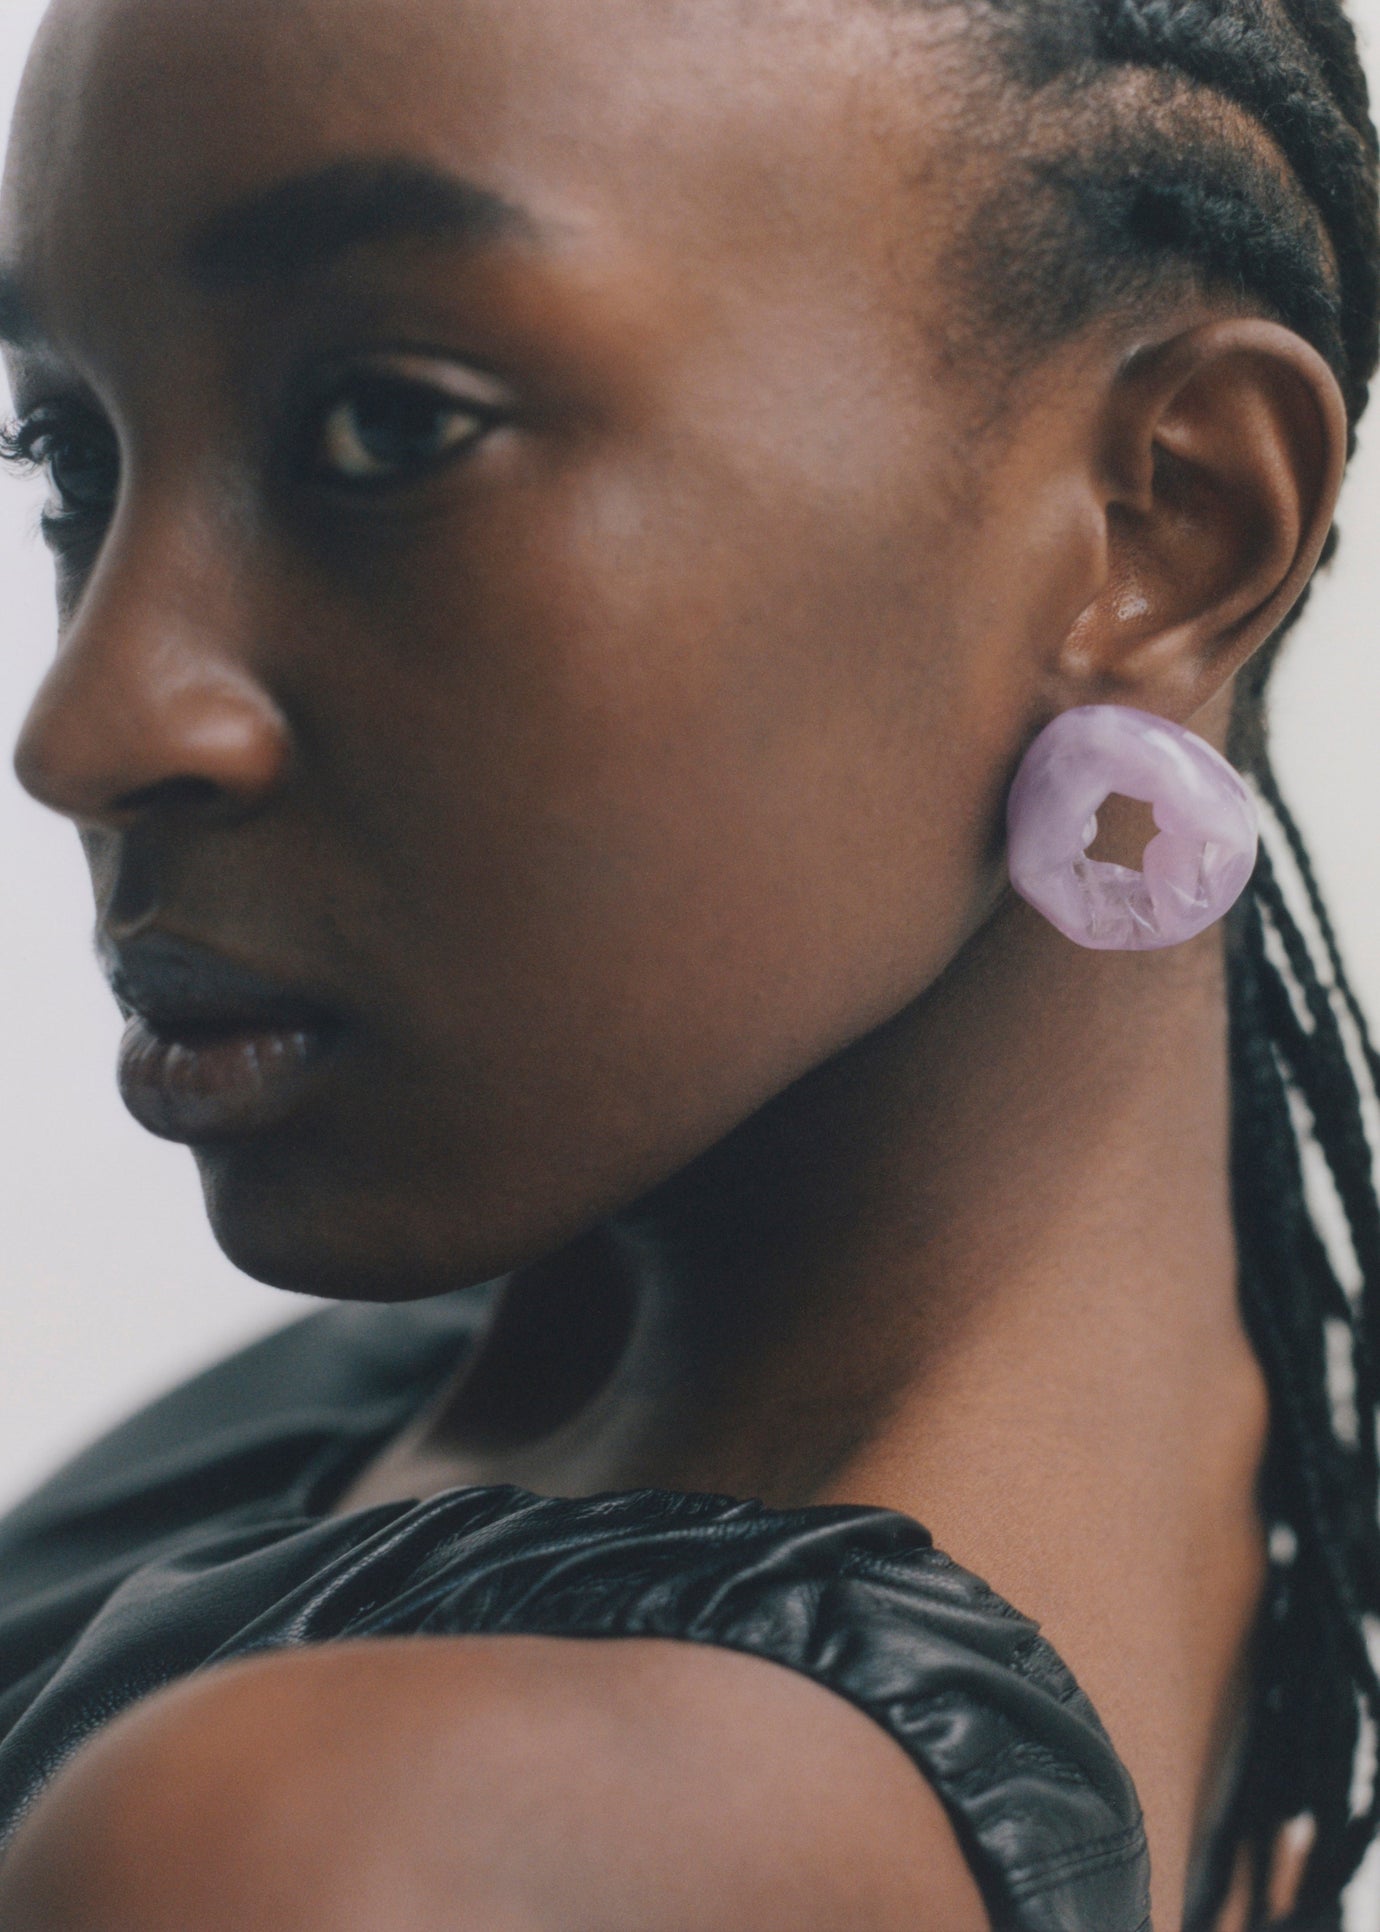 Completedworks Scrunch Bio-Resin Earrings - Lilac - 1